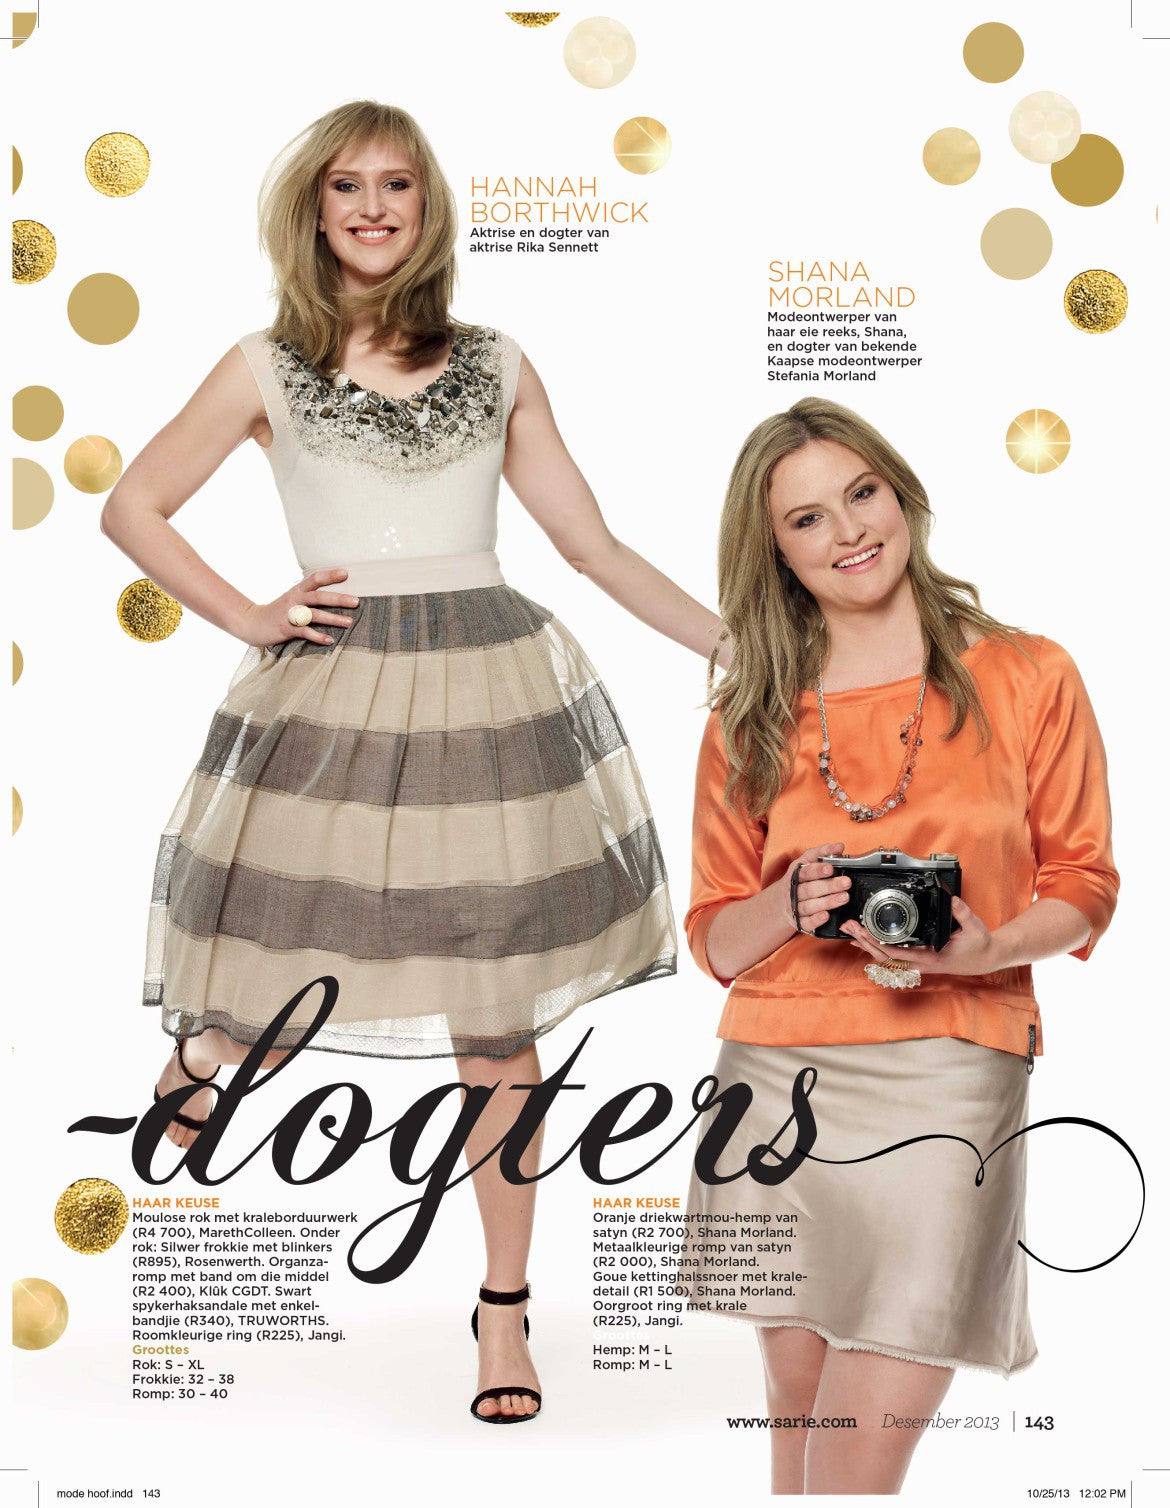 Media: Sarie Magazine December 2013